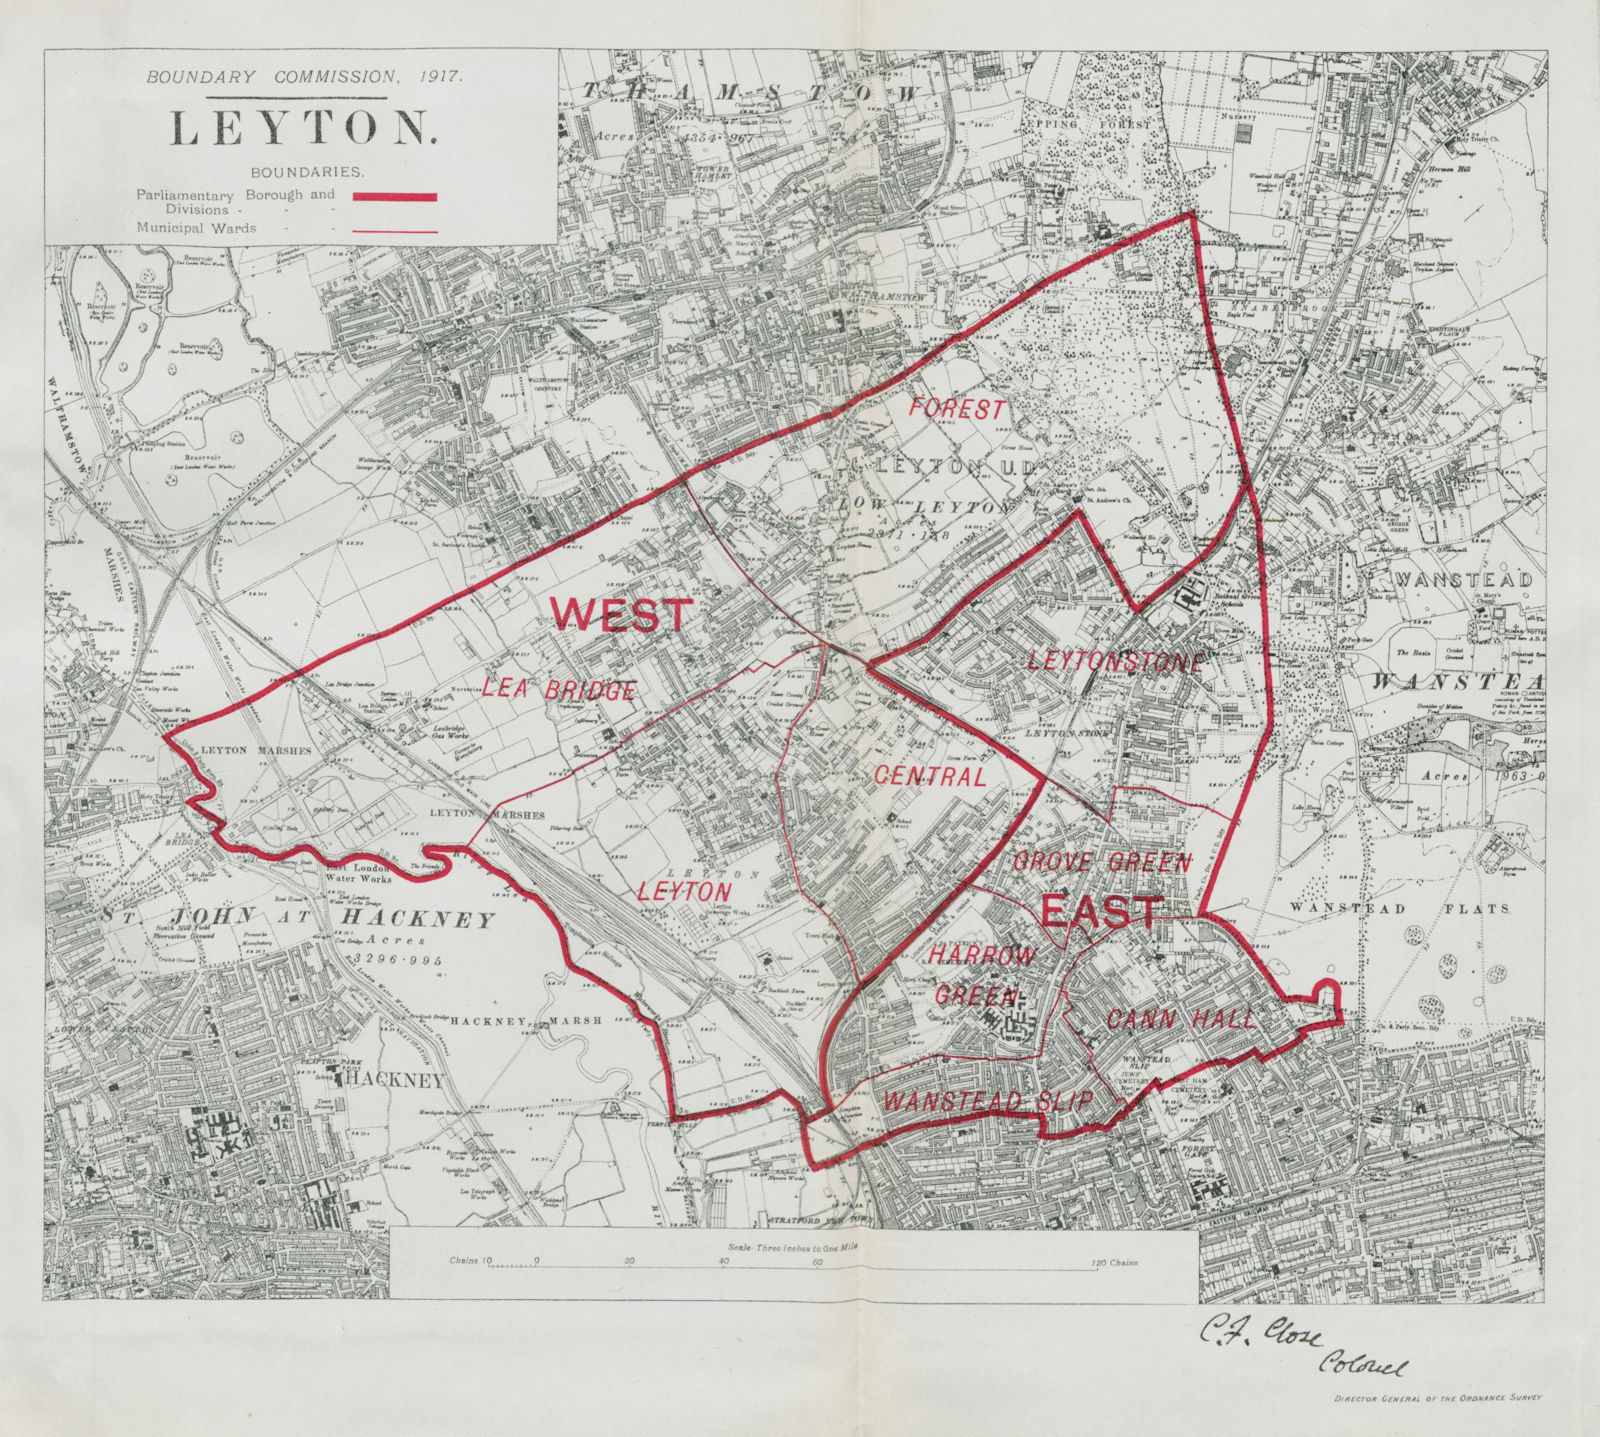 Leyton Parliamentary Borough. Wanstead London. BOUNDARY COMMISSION 1917 map